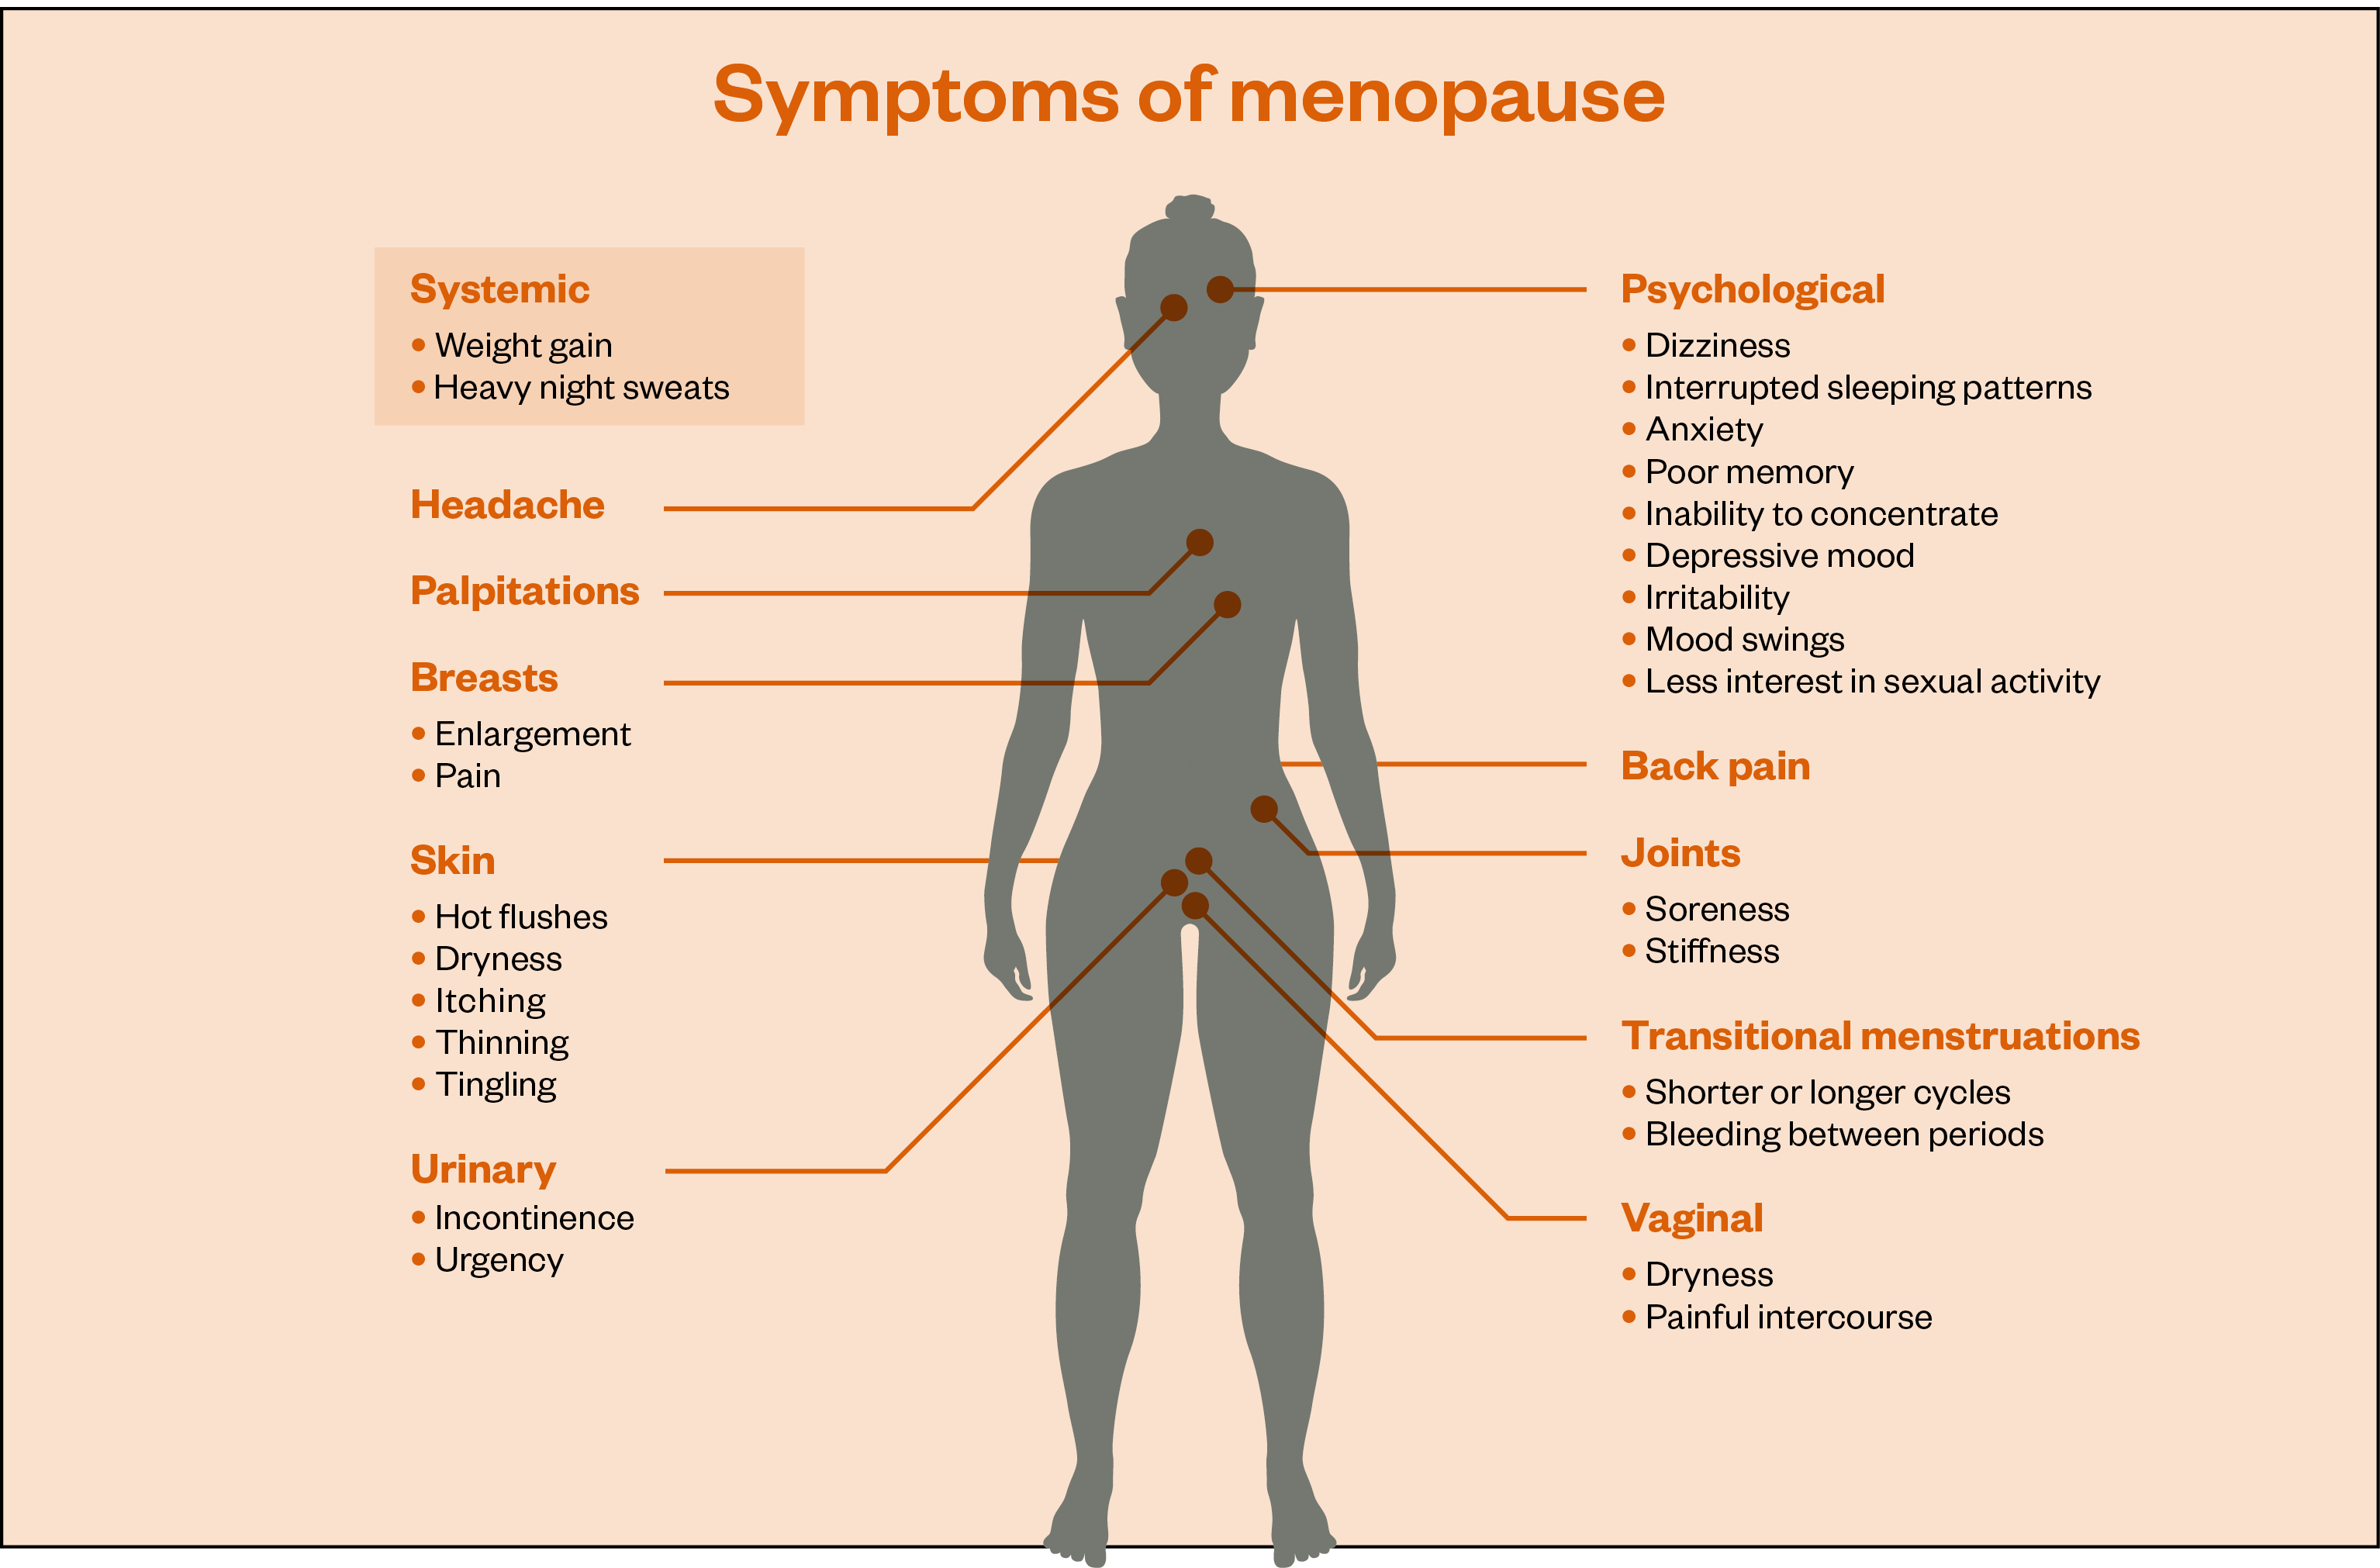 Figure 1: Symptoms of menopause